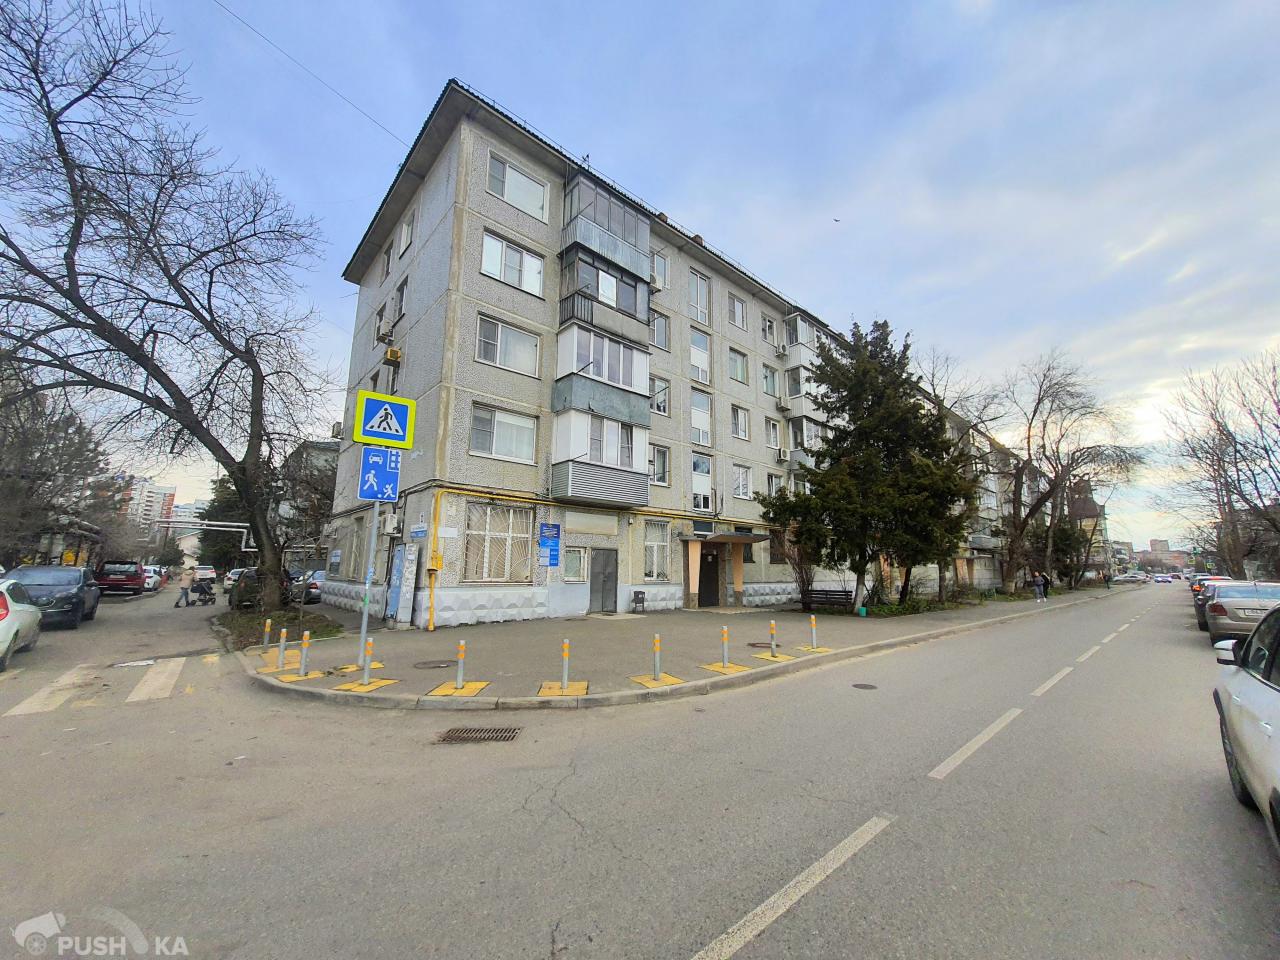 Продаётся 1-комнатная квартира 30.0 кв.м. этаж 4/5 за 3 450 000 руб 